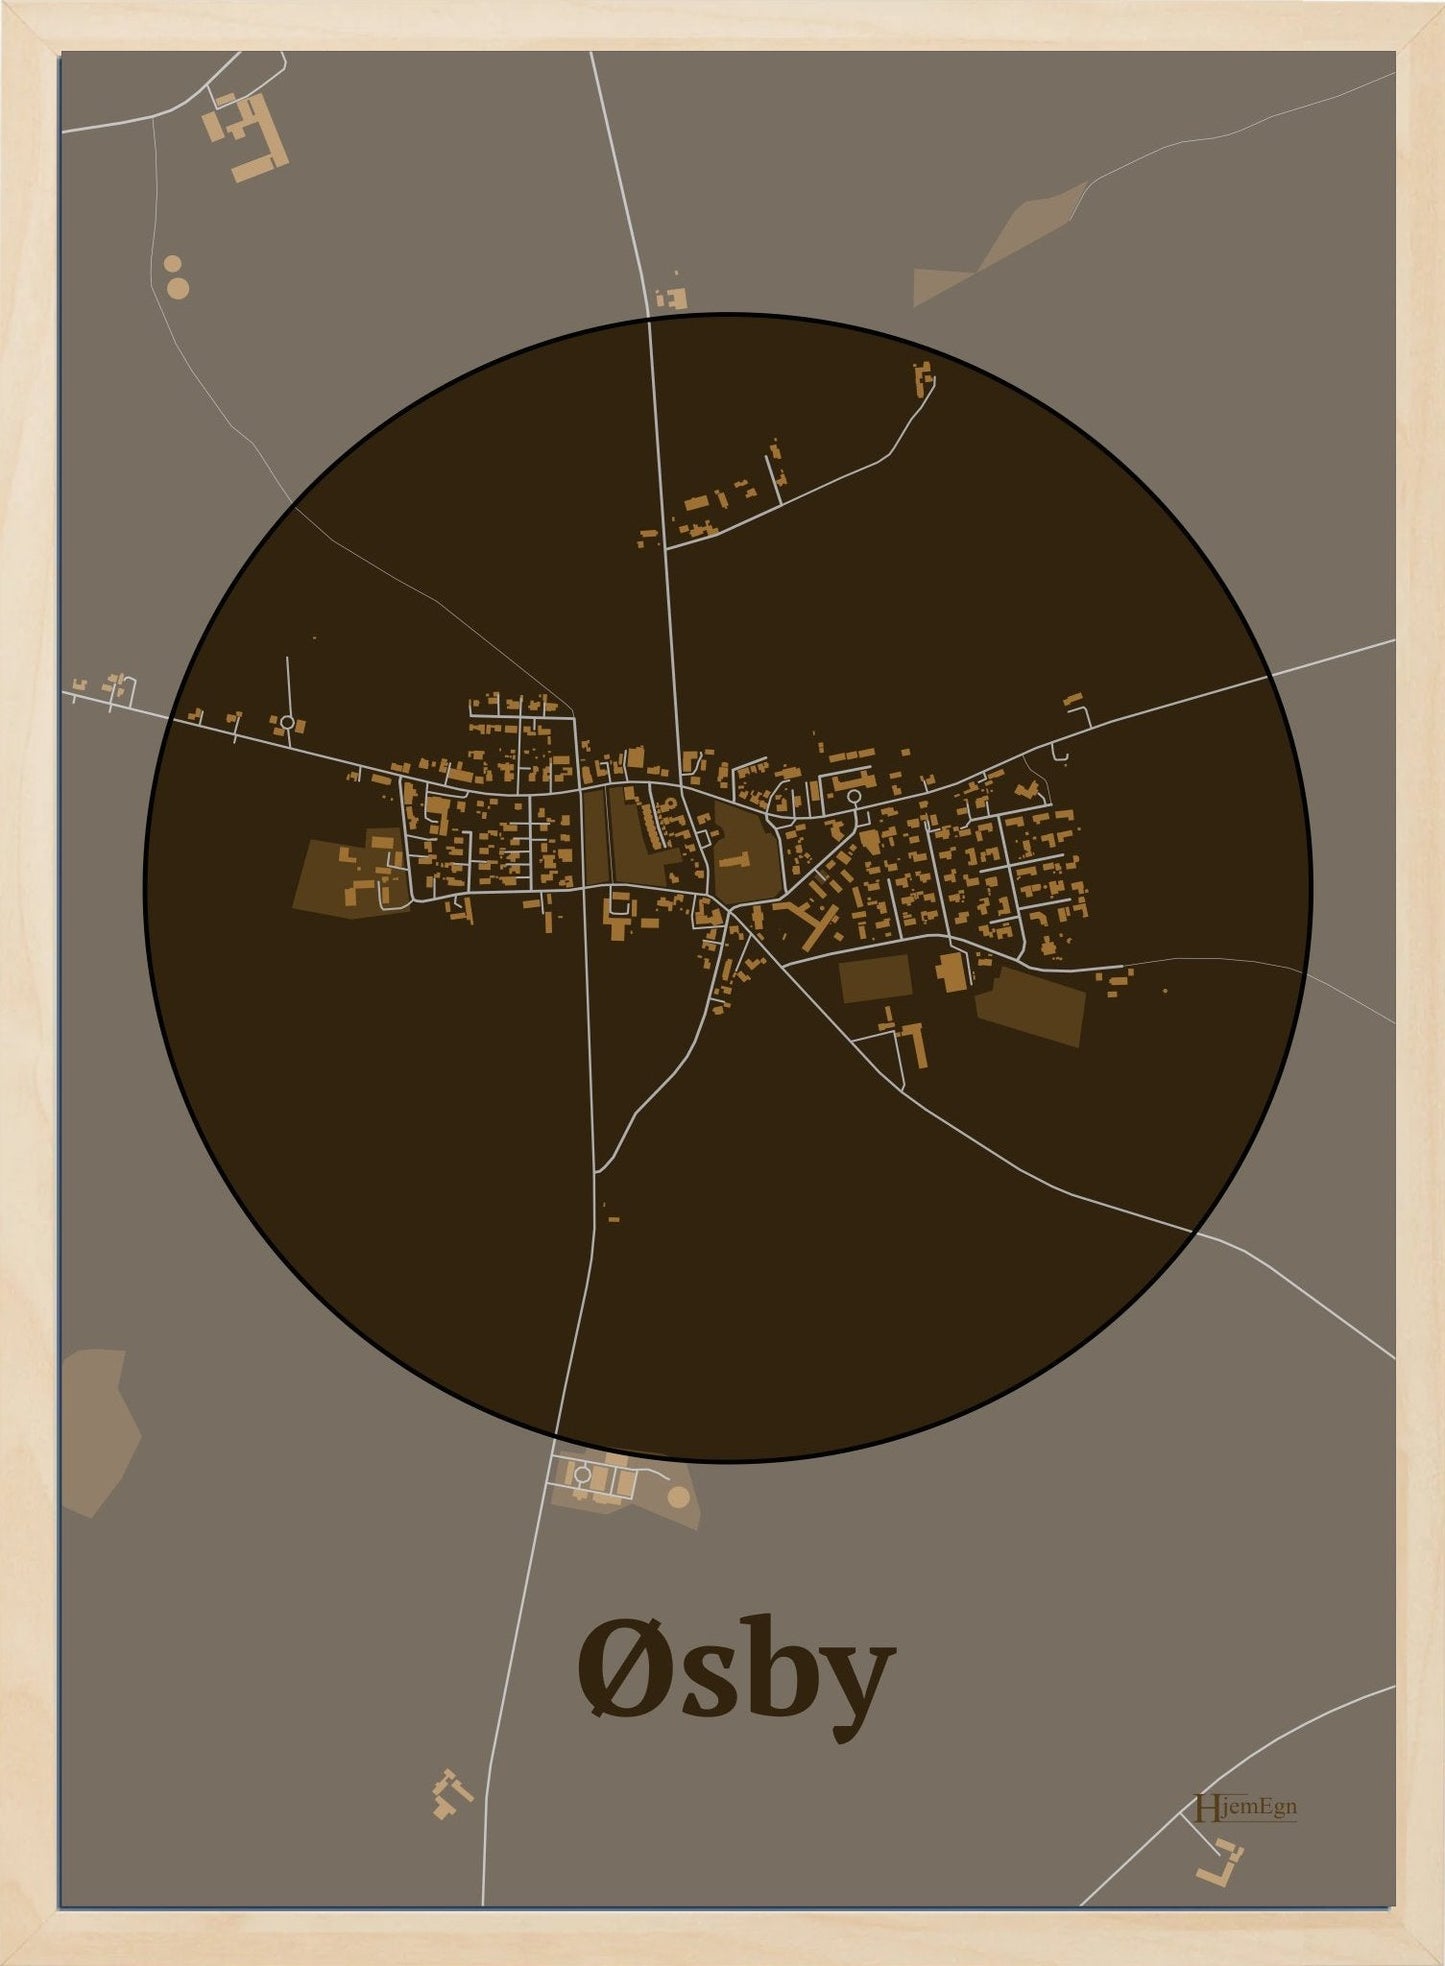 Øsby plakat i farve mørk brun og HjemEgn.dk design centrum. Design bykort for Øsby